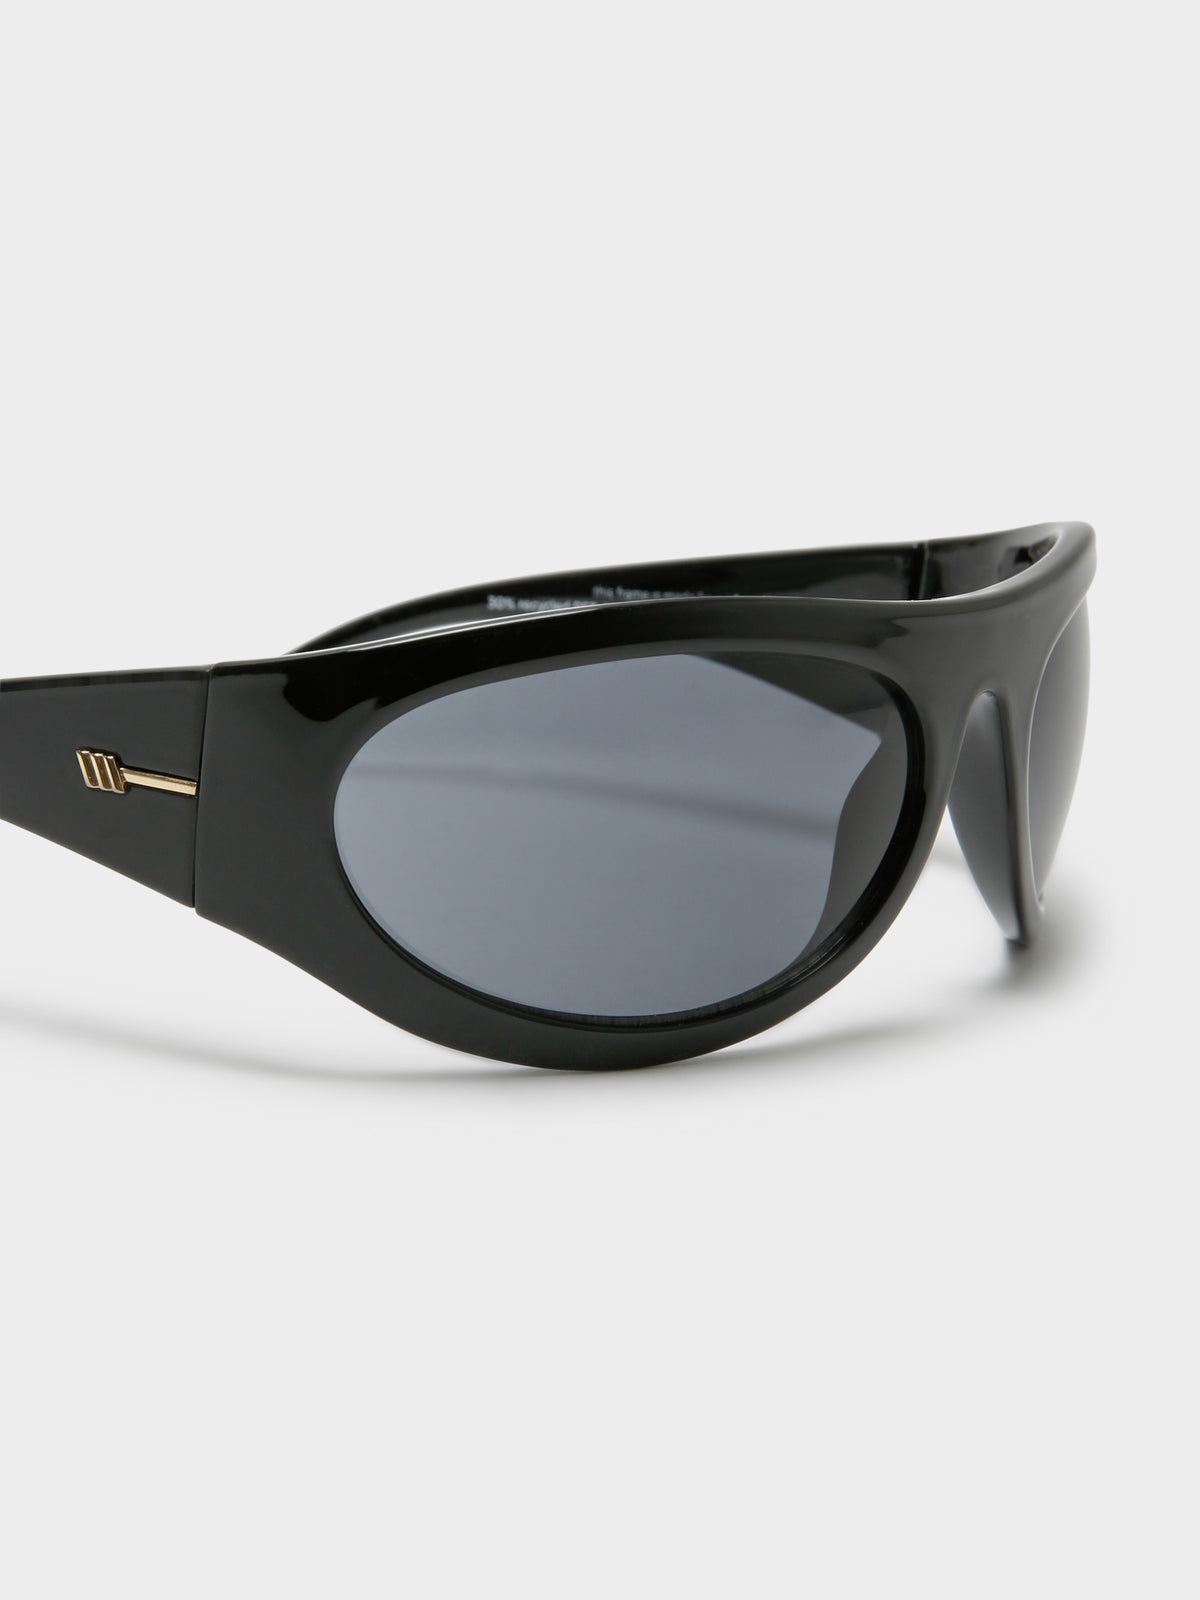 Trash Trix Sunglasses in Black Smoke